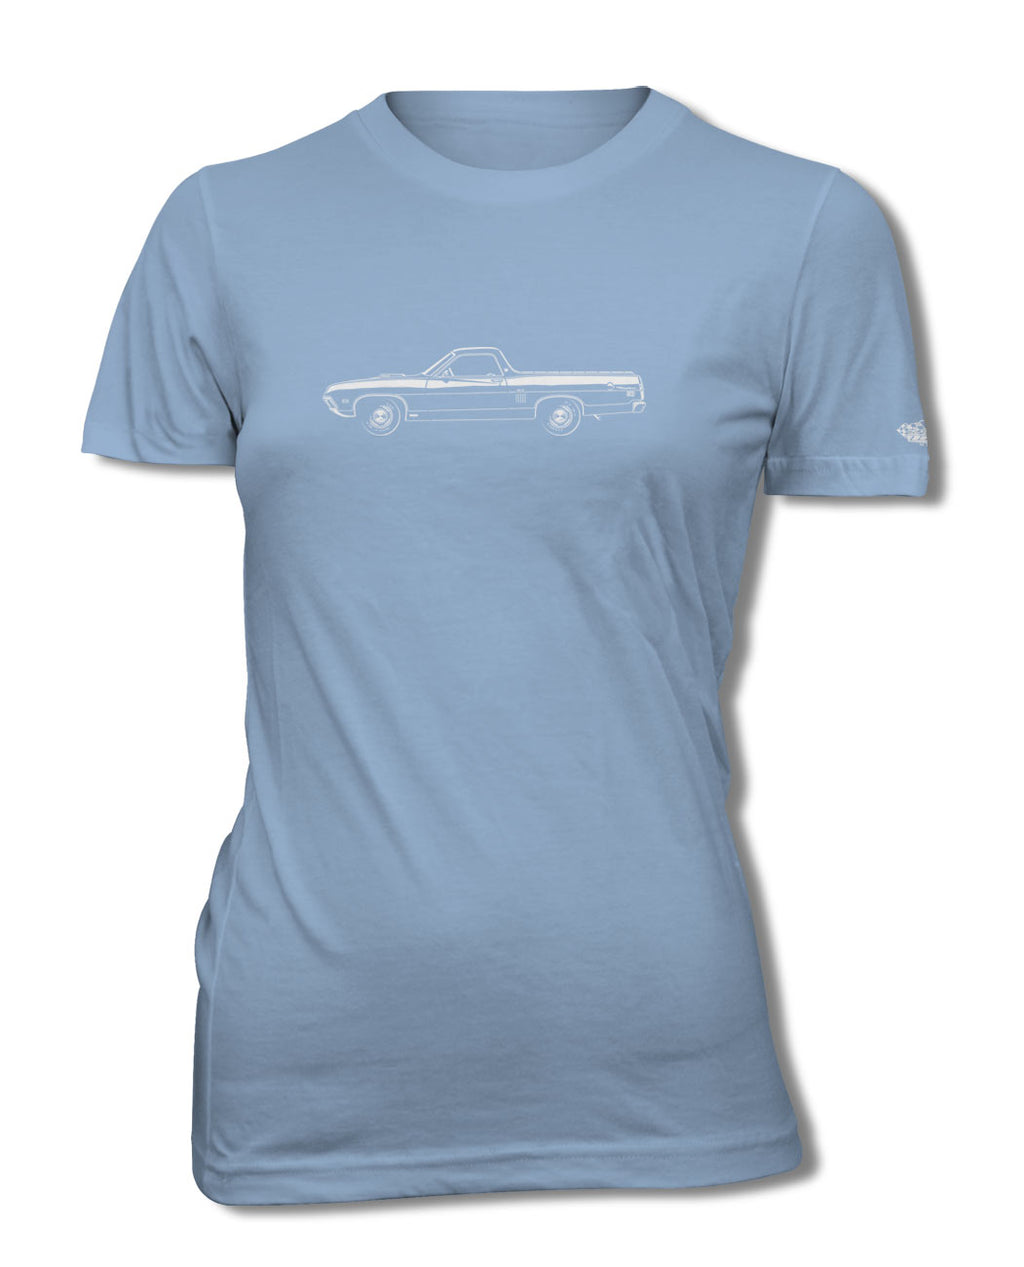 1970 Ford Ranchero GT T-Shirt - Women - Side View